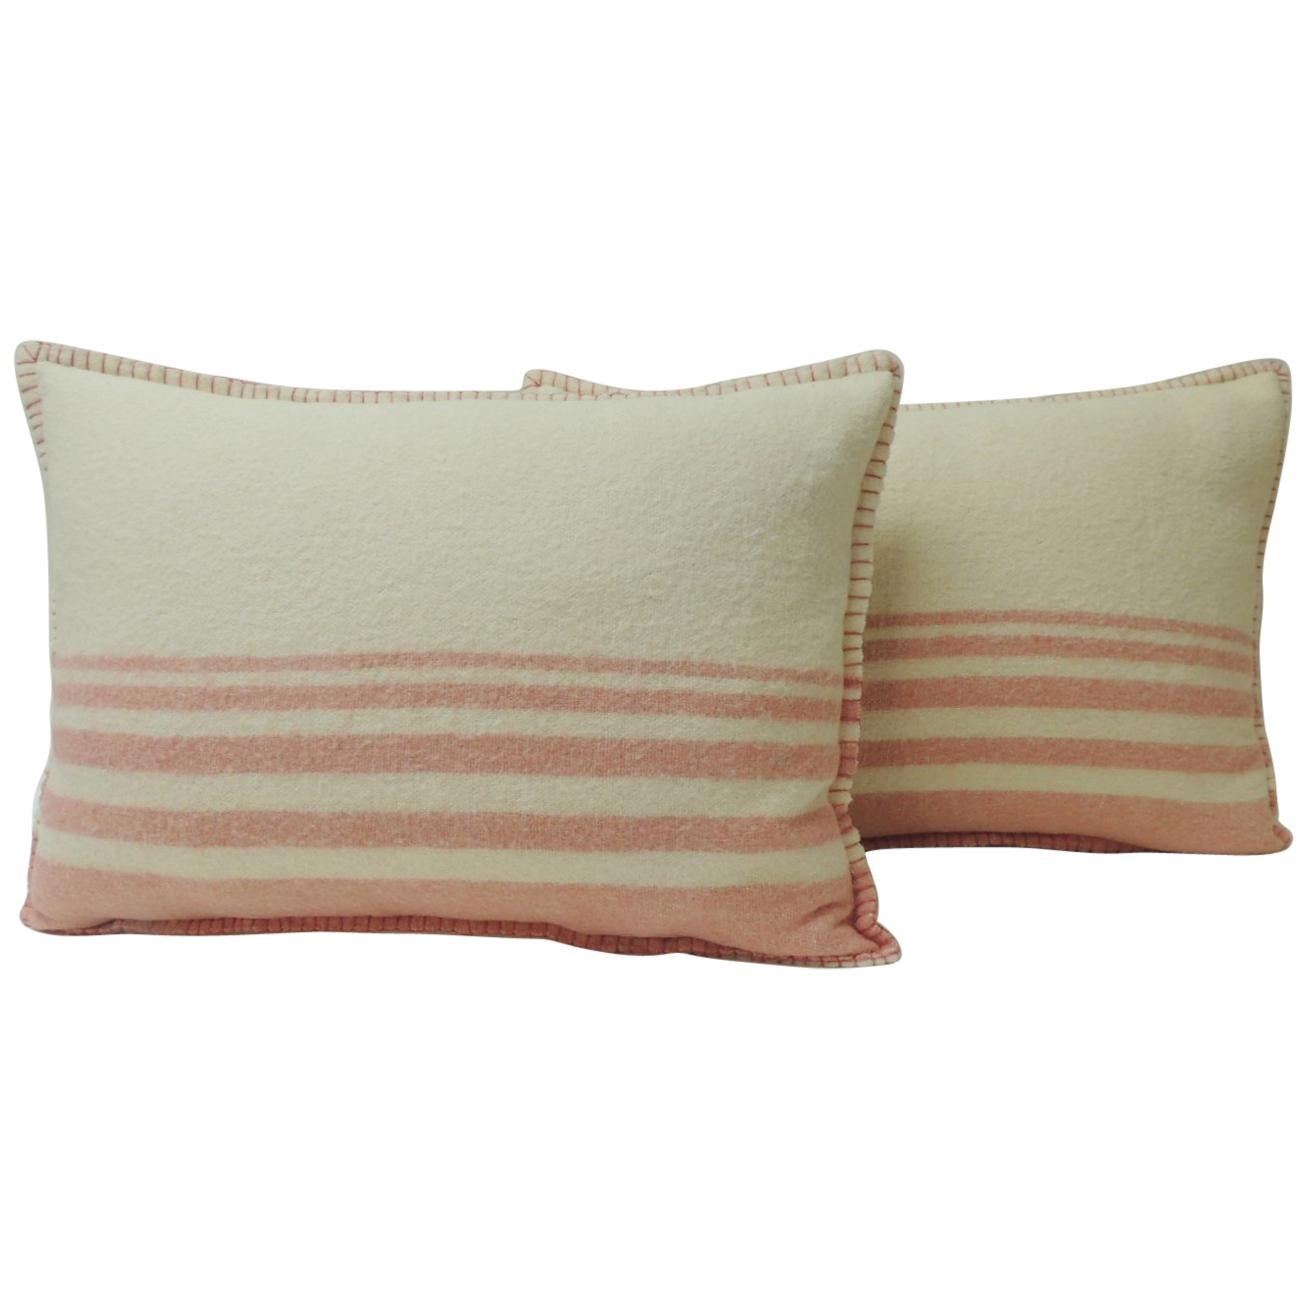 Pair of Vintage Pink & Natural Stripes English Wool Decorative Lumbar Pillows